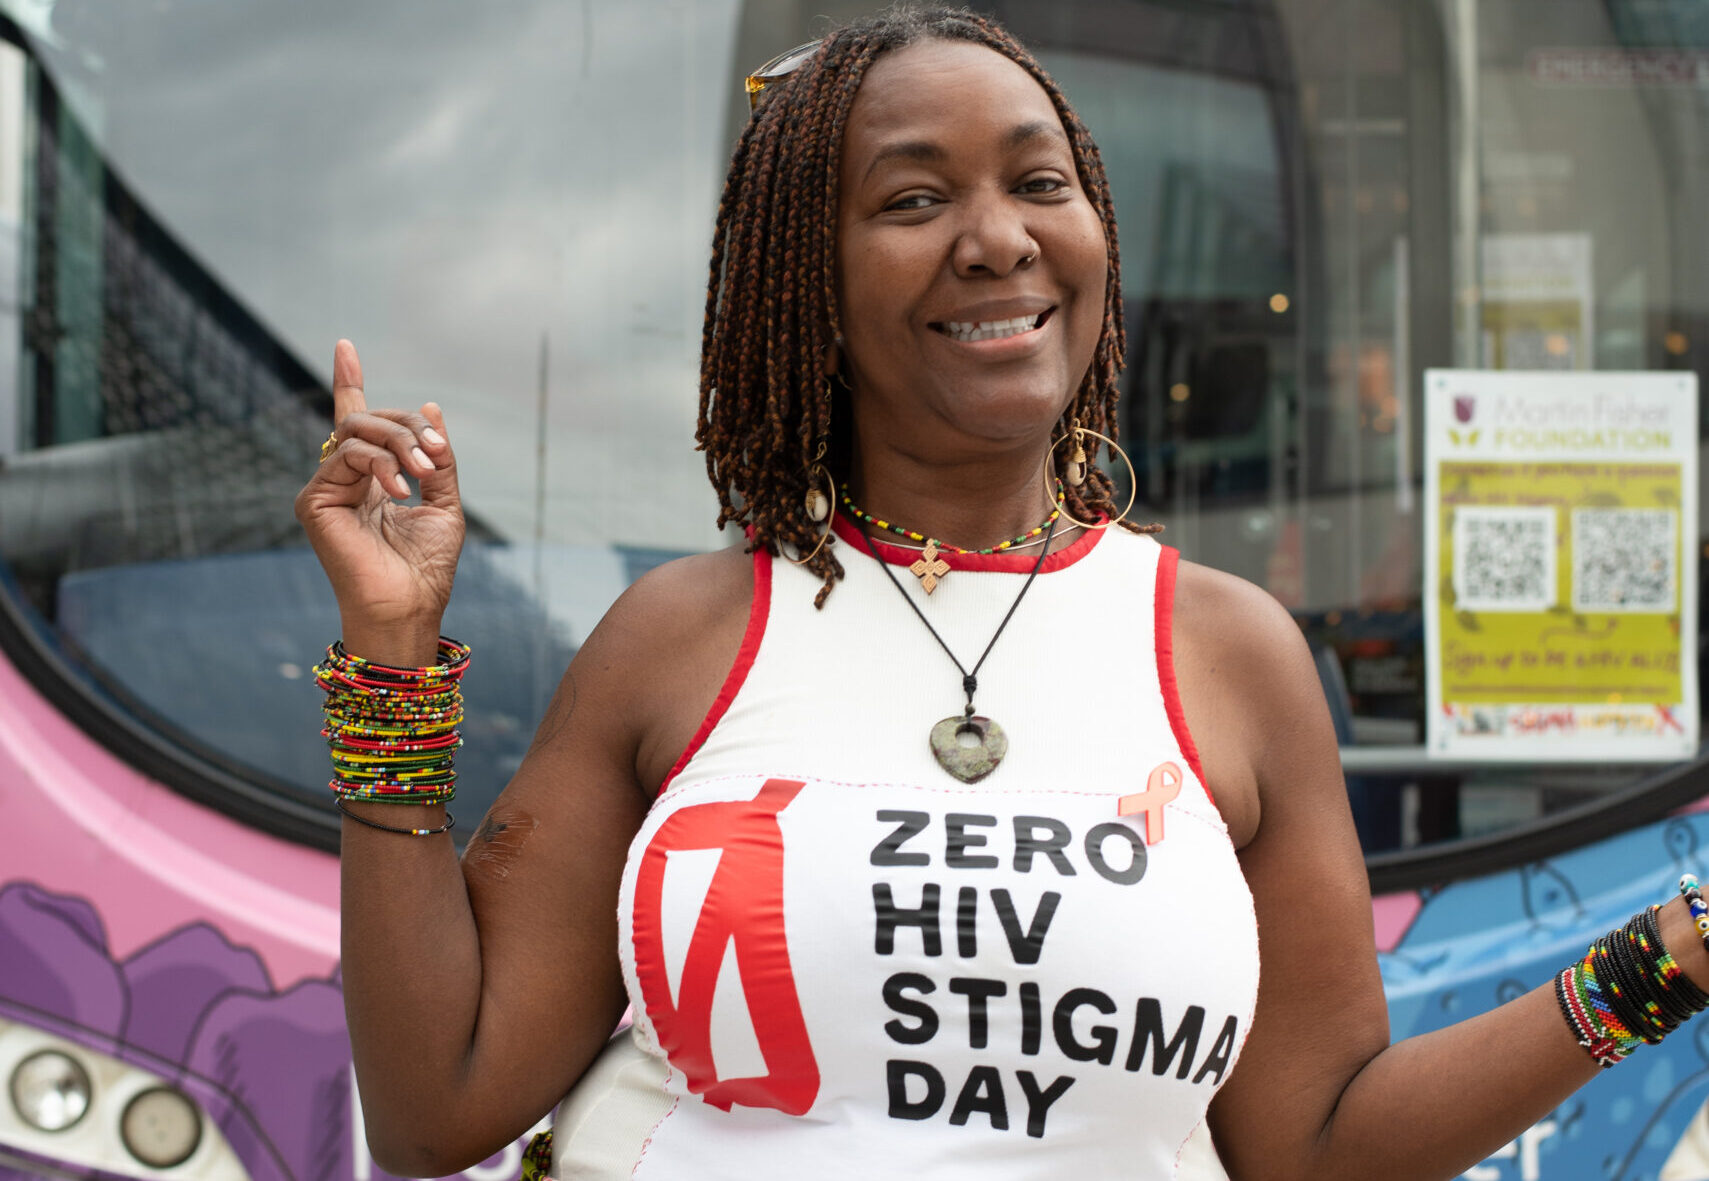 HIV Stigma Sucks: Brighton & Hove to mark Zero HIV Stigma Day on Sunday, July 21